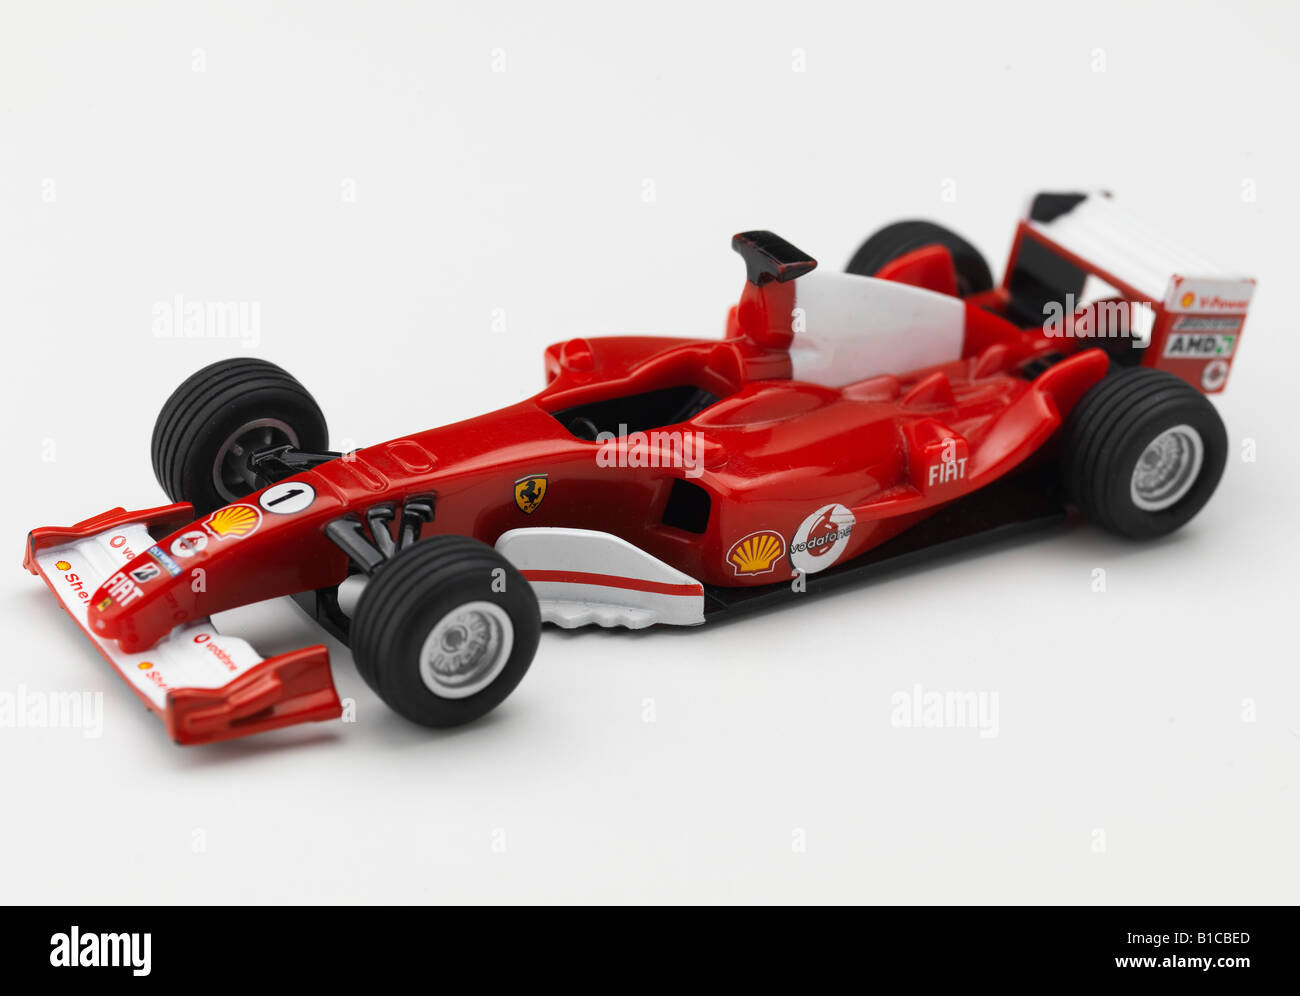 ferrari grand prix formula 1 car run model making Stock Photo - Alamy